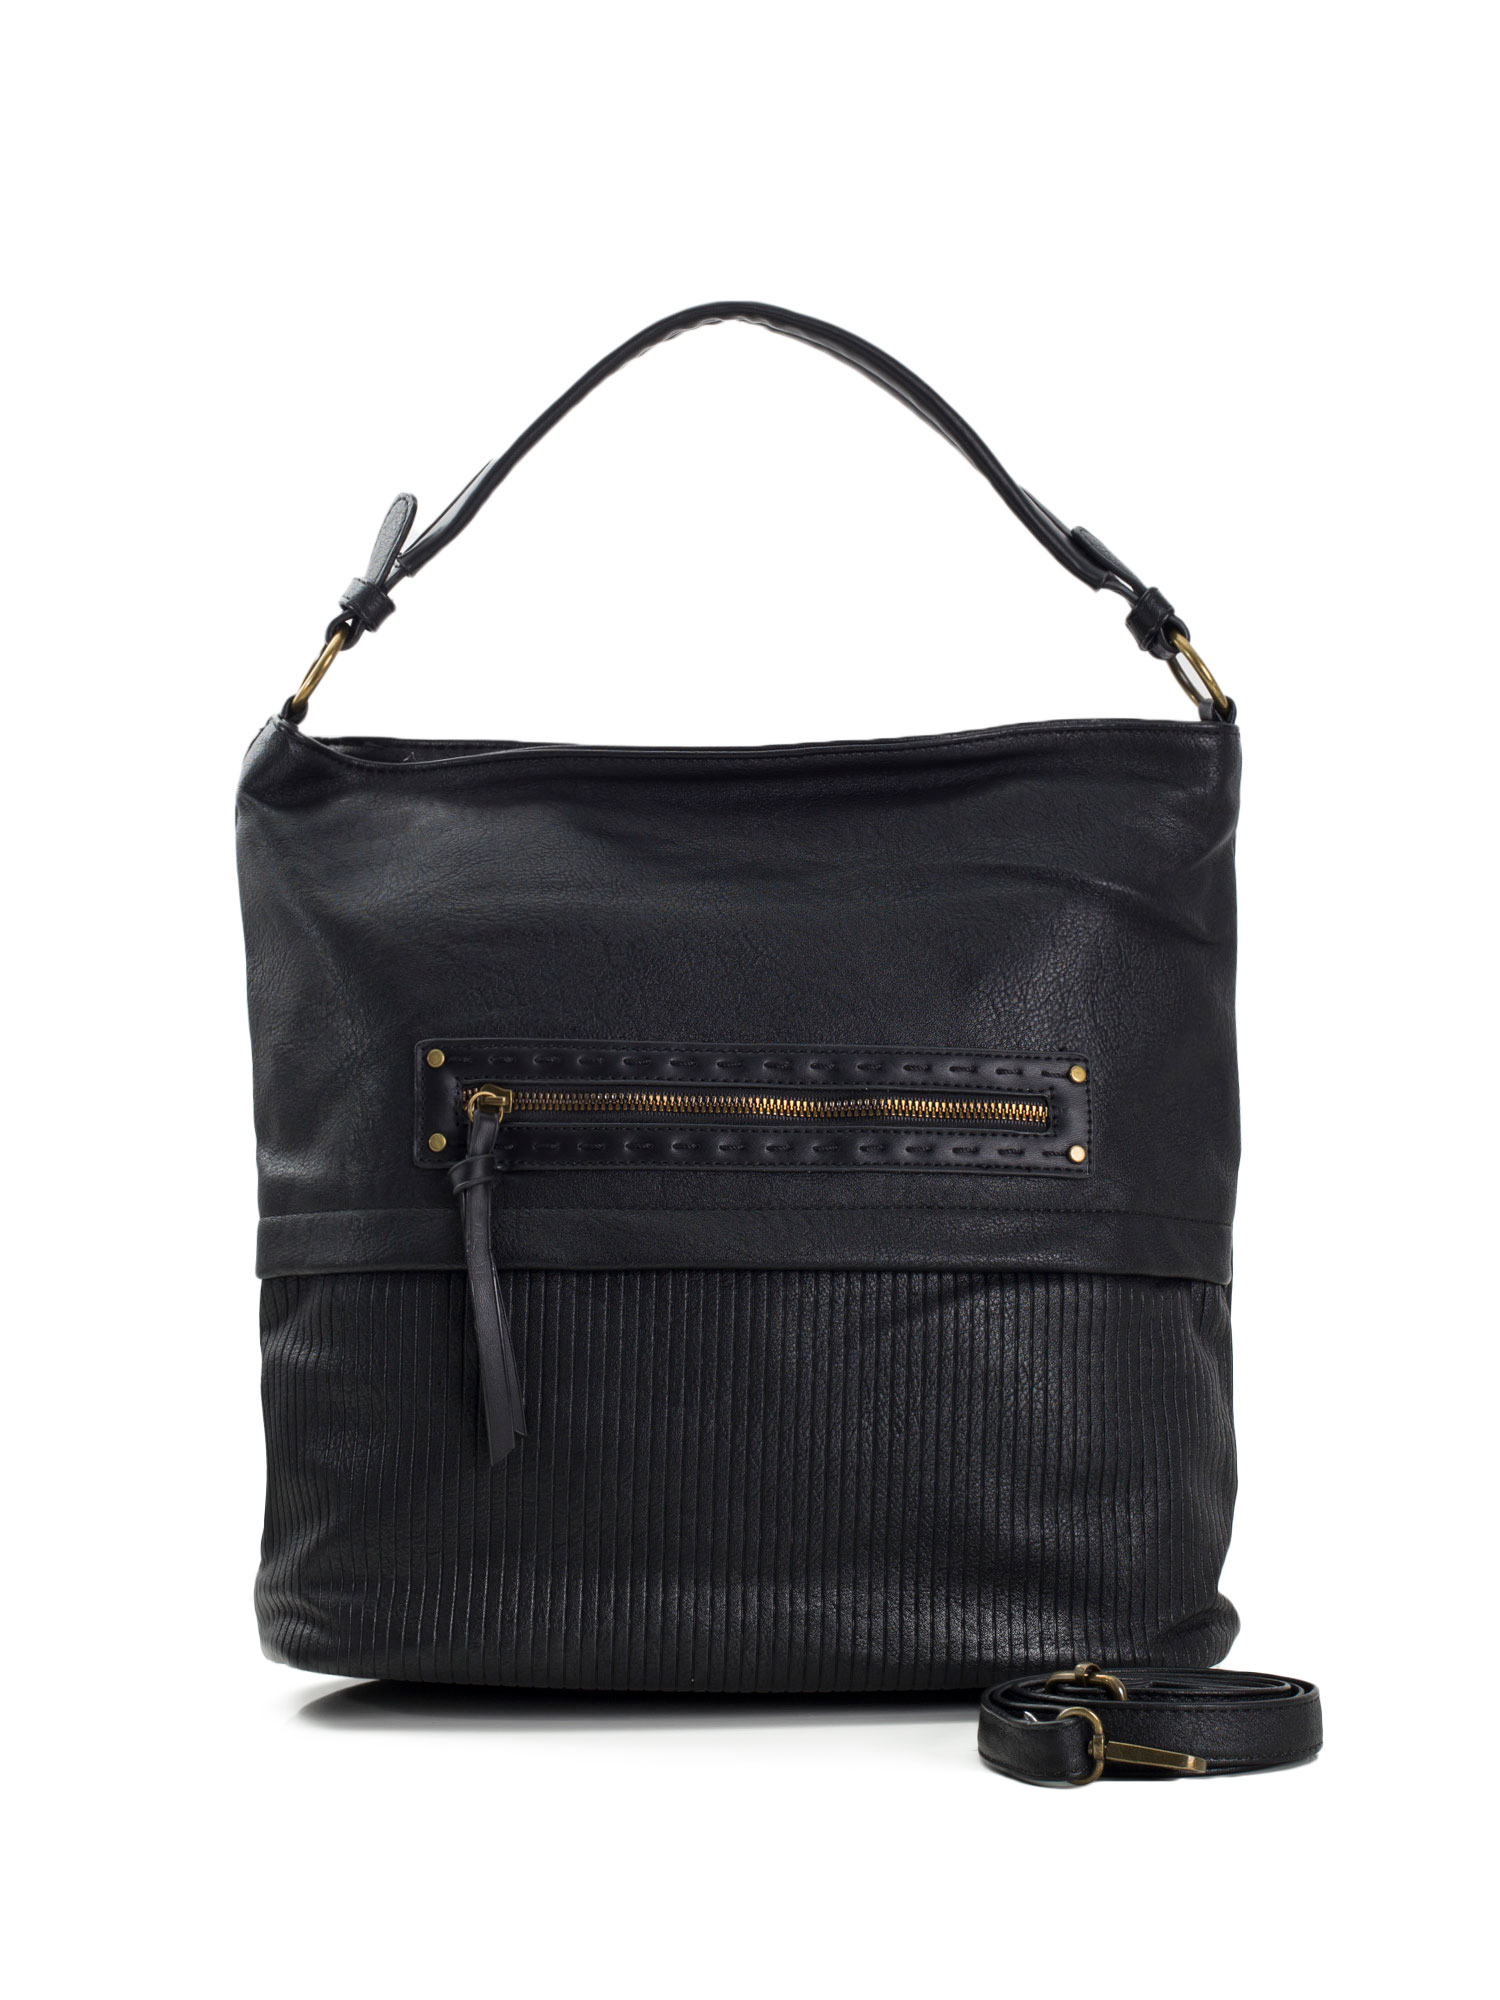 Black women's handbag with detachable strap